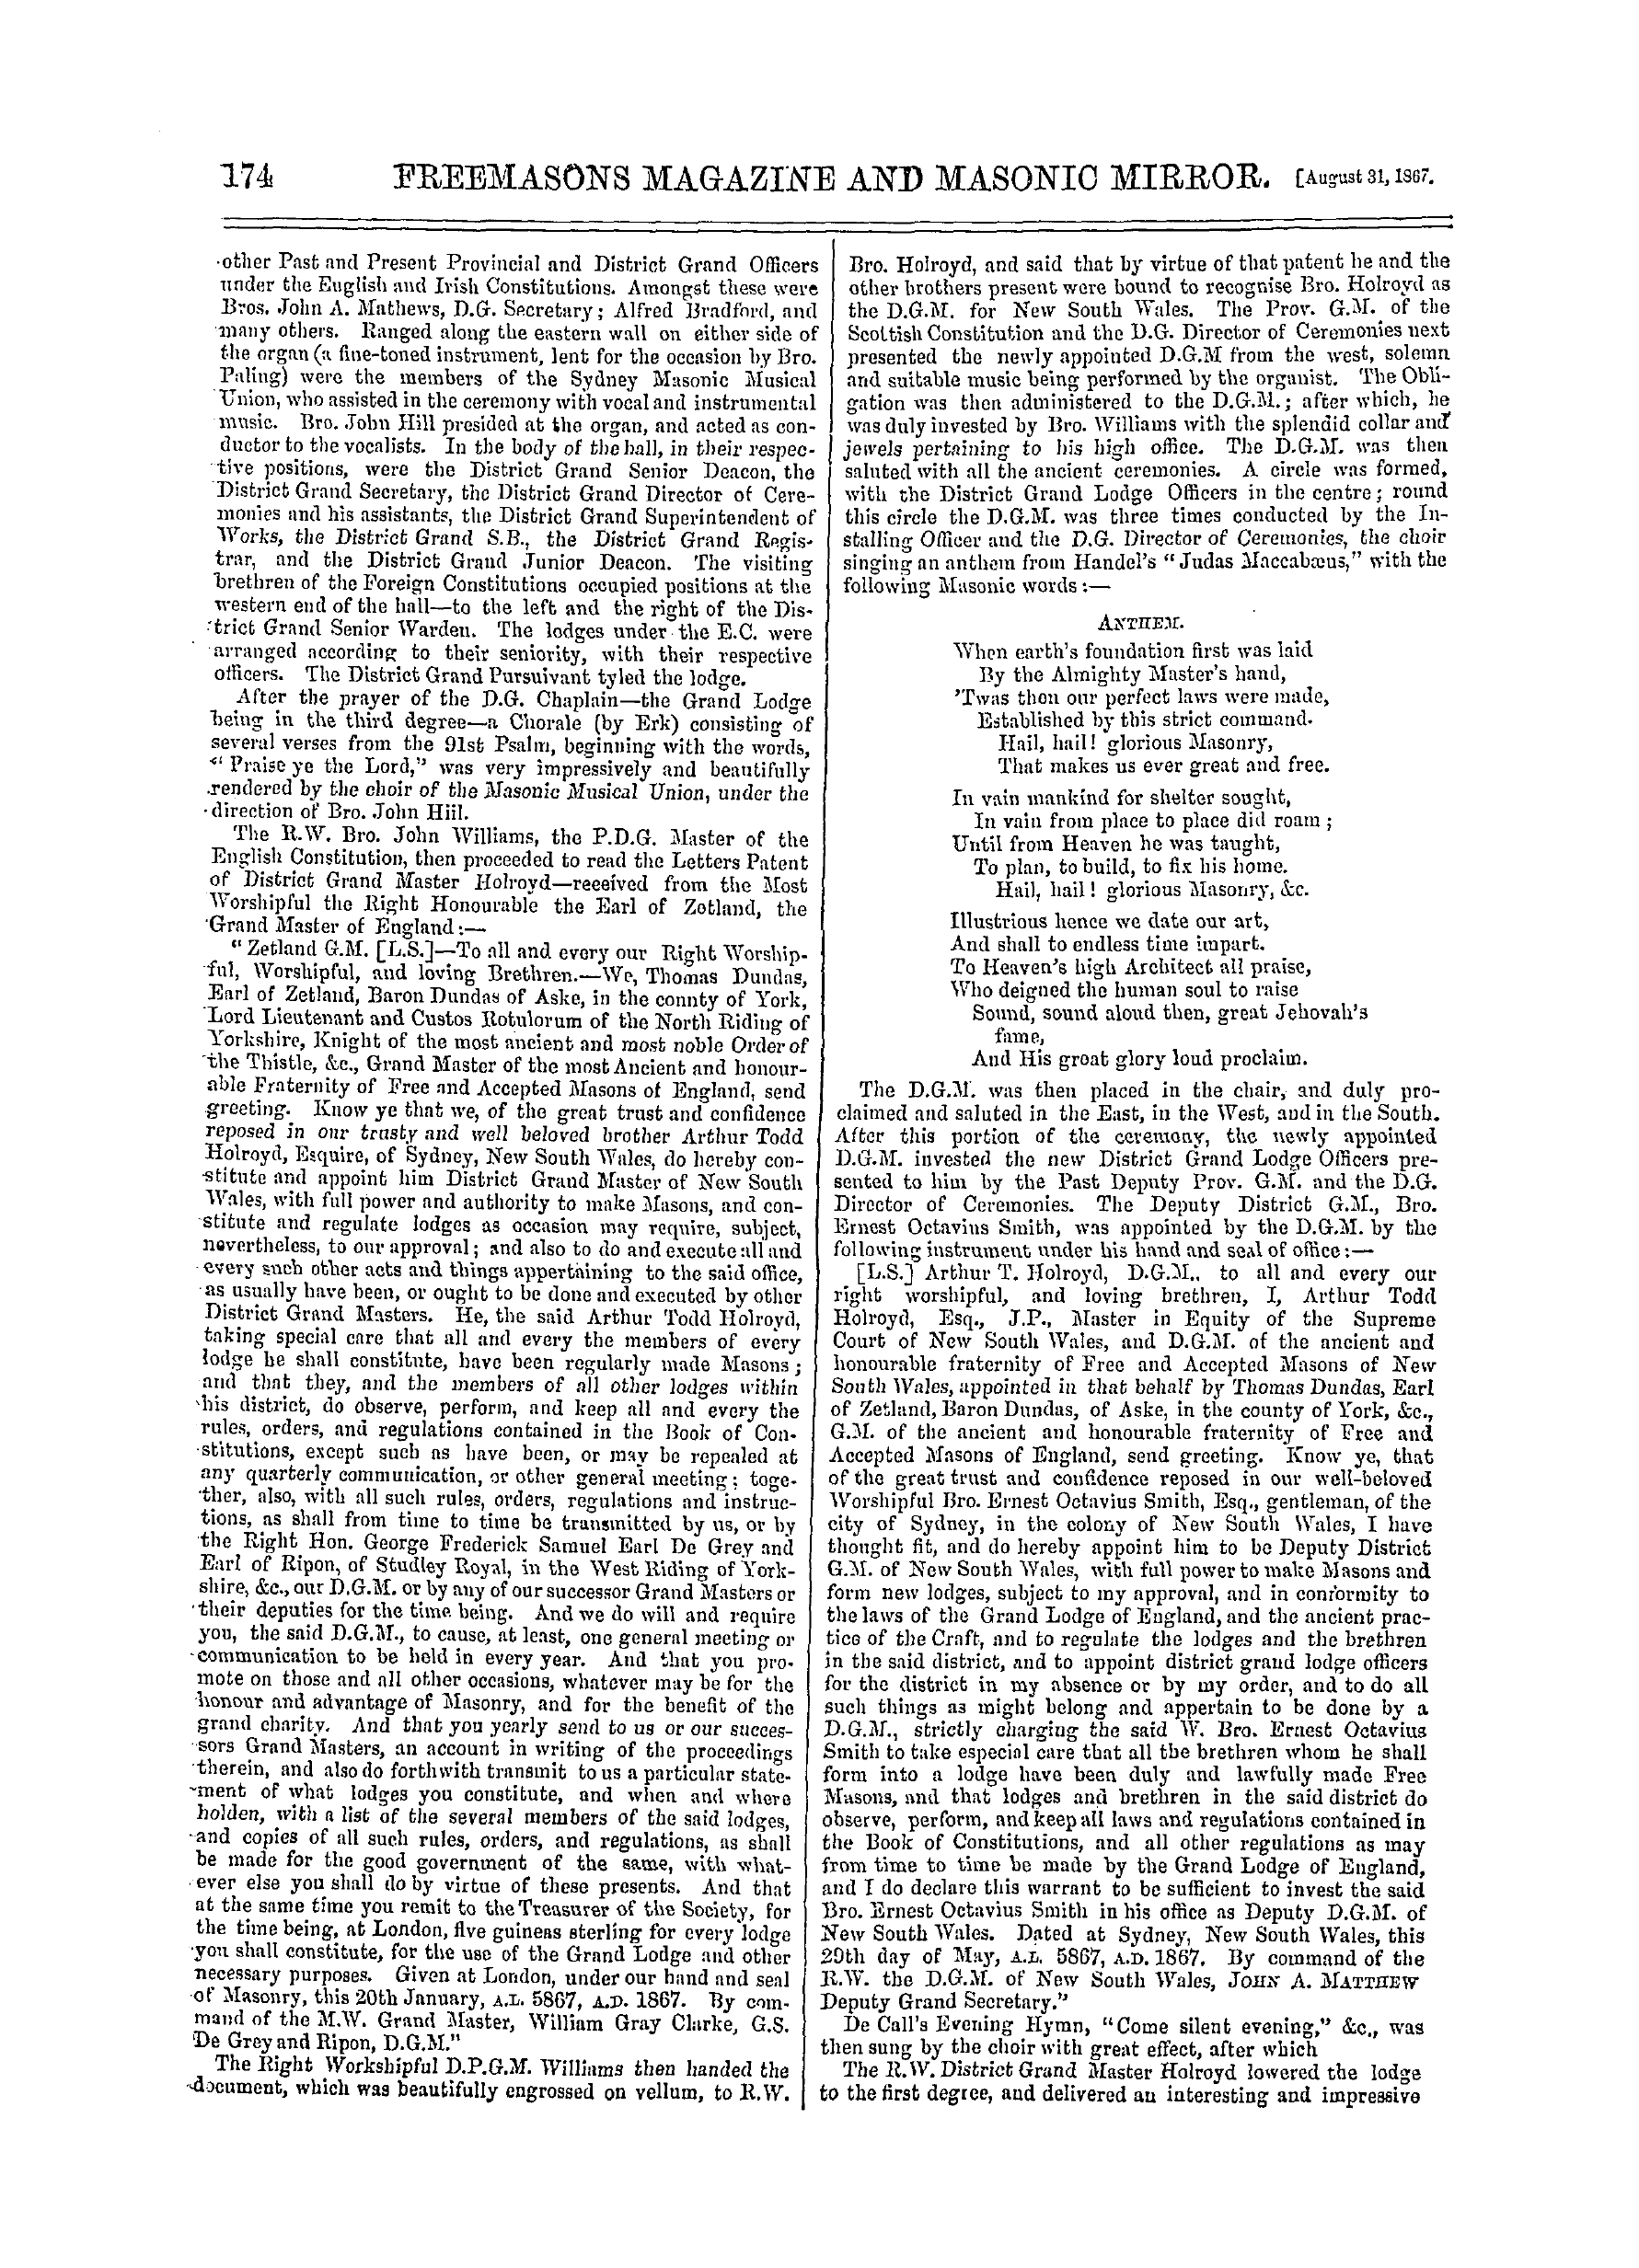 The Freemasons' Monthly Magazine: 1867-08-31 - Australia.